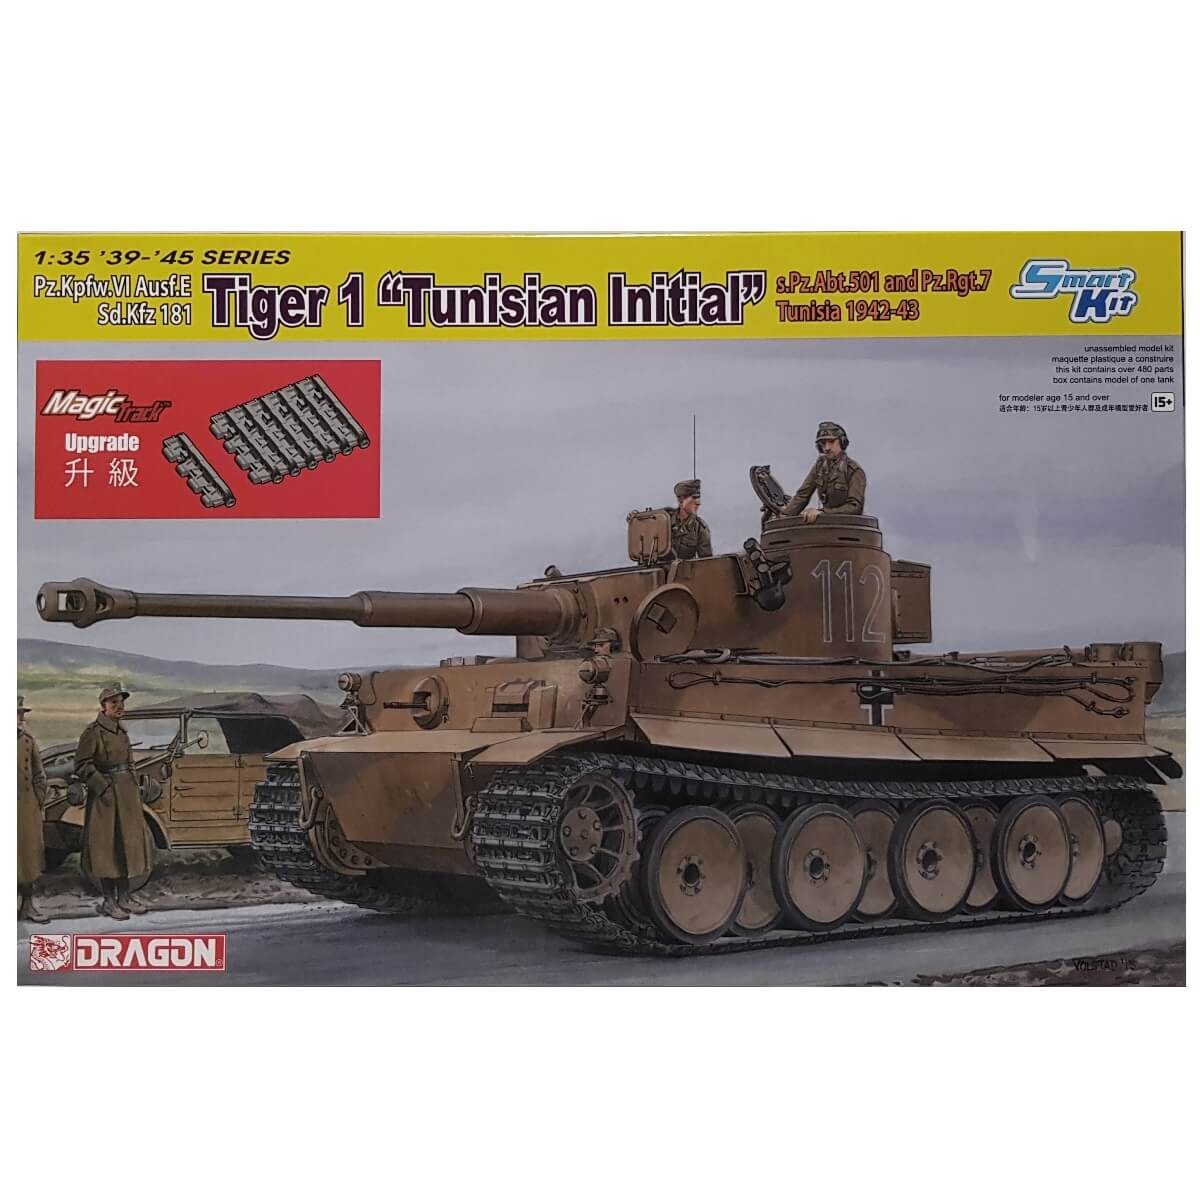 1:35 Pz.Kpfw. VI Ausf. E Sd.Kfz 181 Tiger 1 - Tunisian Initial - DRAGON